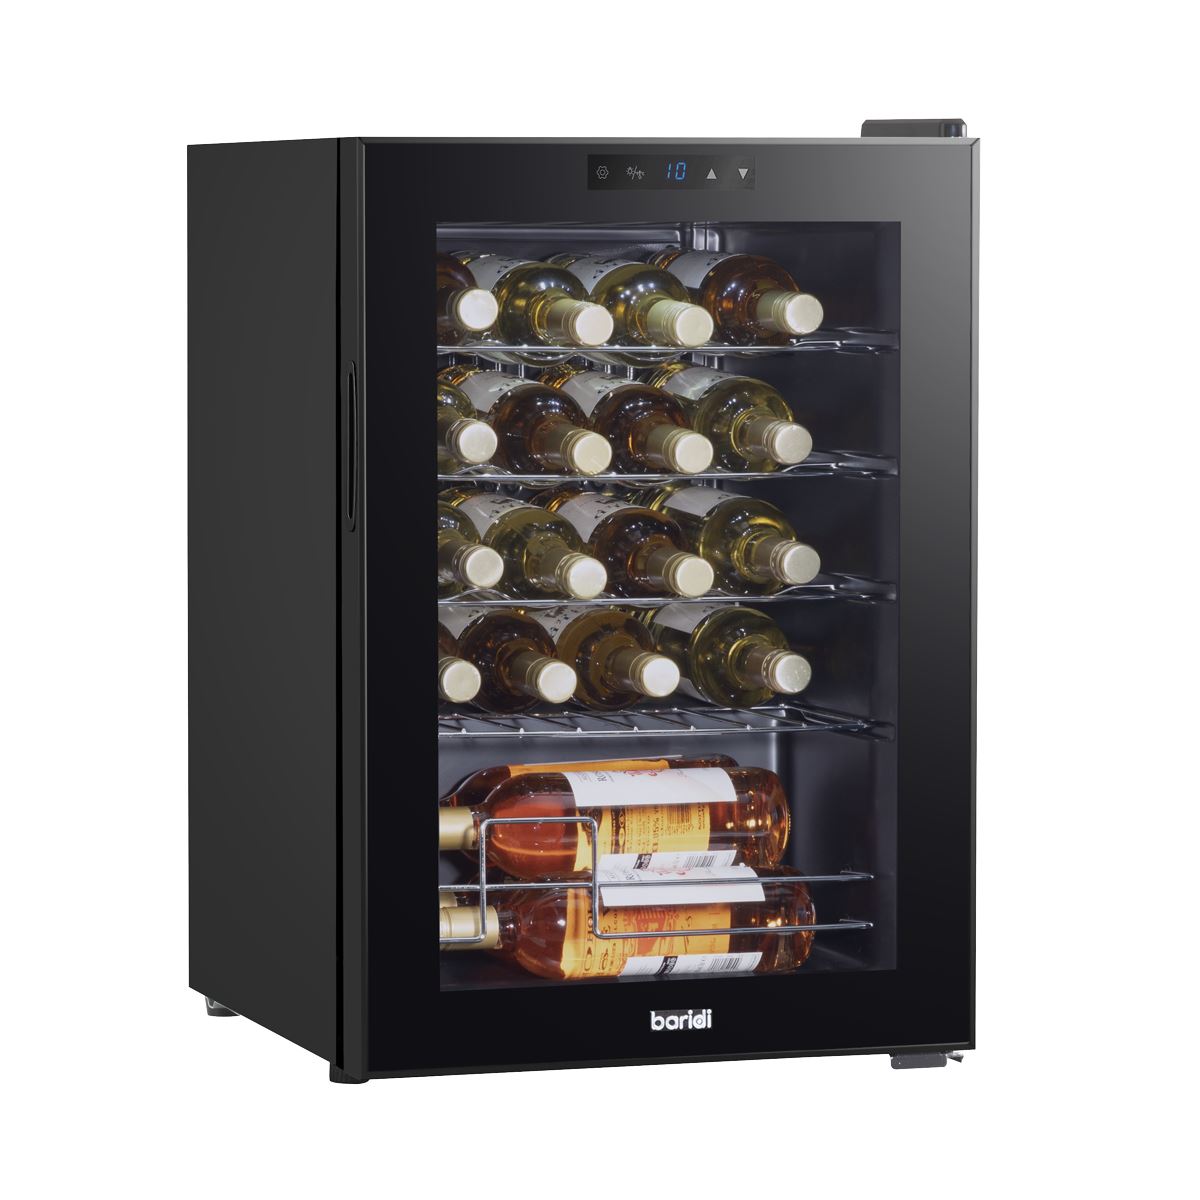 Baridi Wine Cooler/Fridge, Digital Touchscreen Controls, LED Light, 20 Bottle - Black